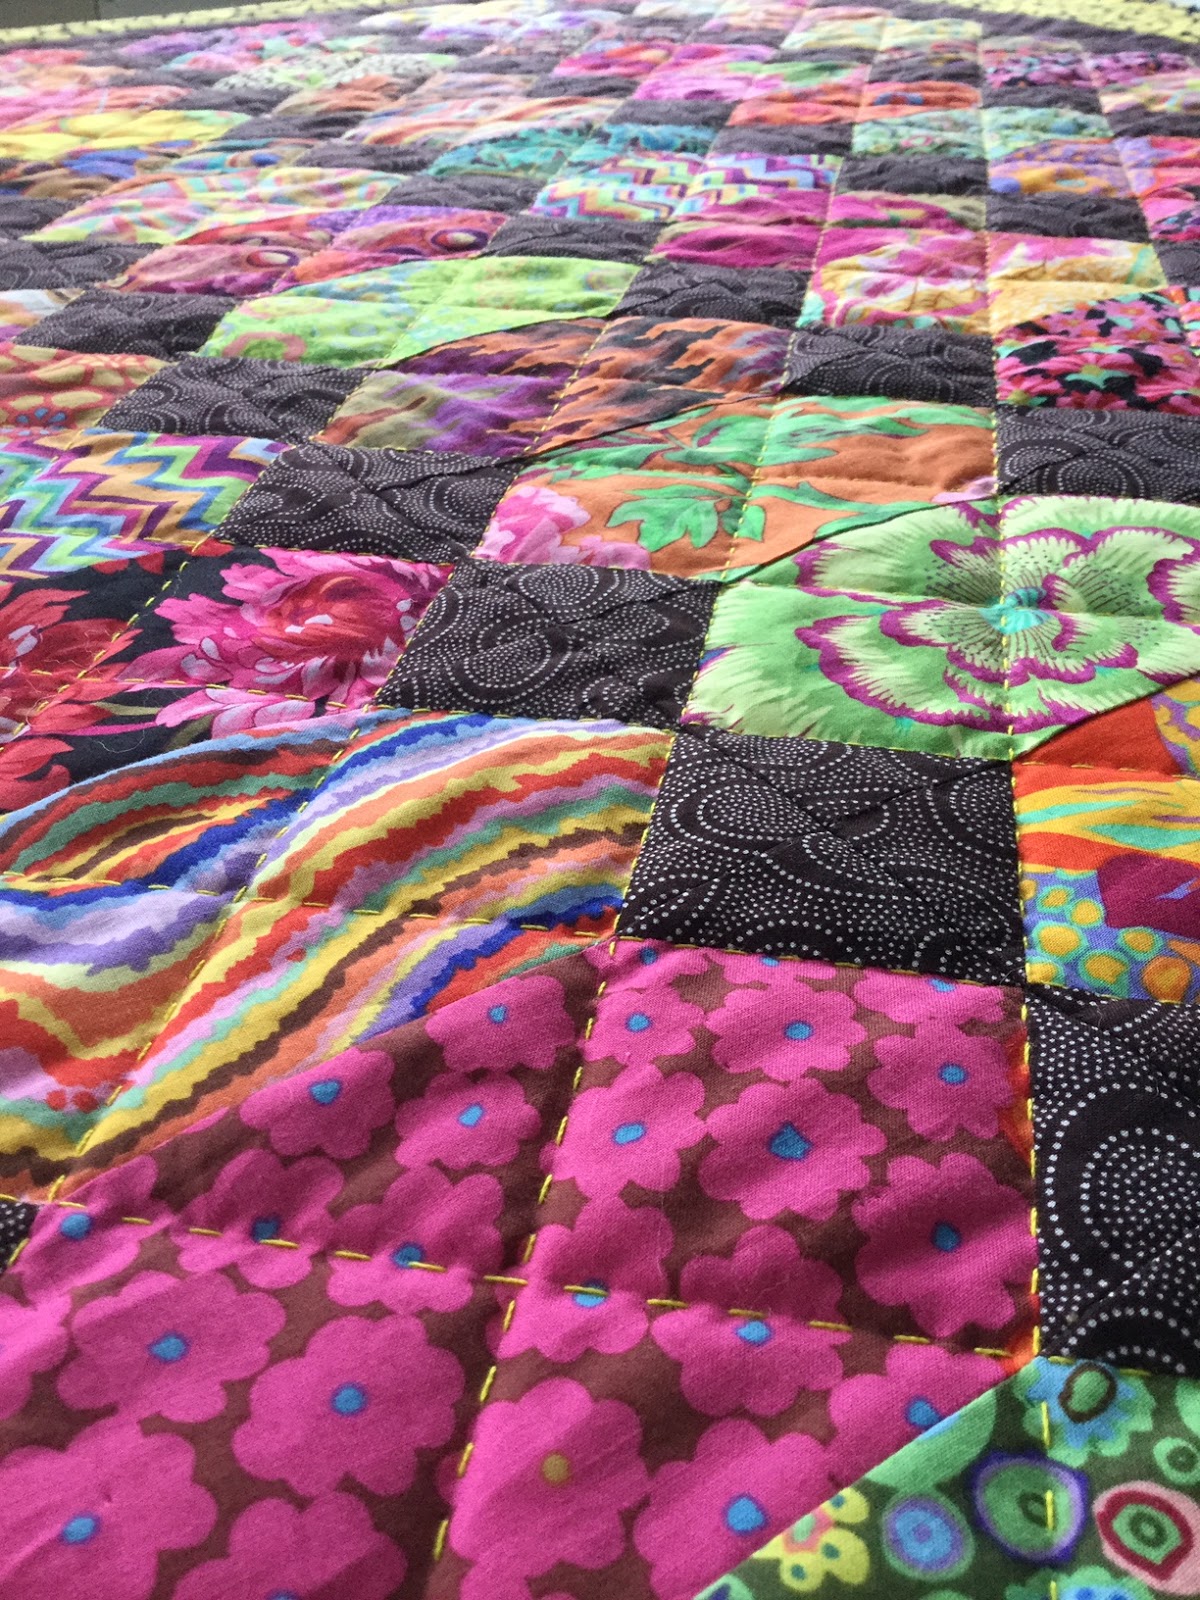 Kaffe Fassett's Quilts in Morocco